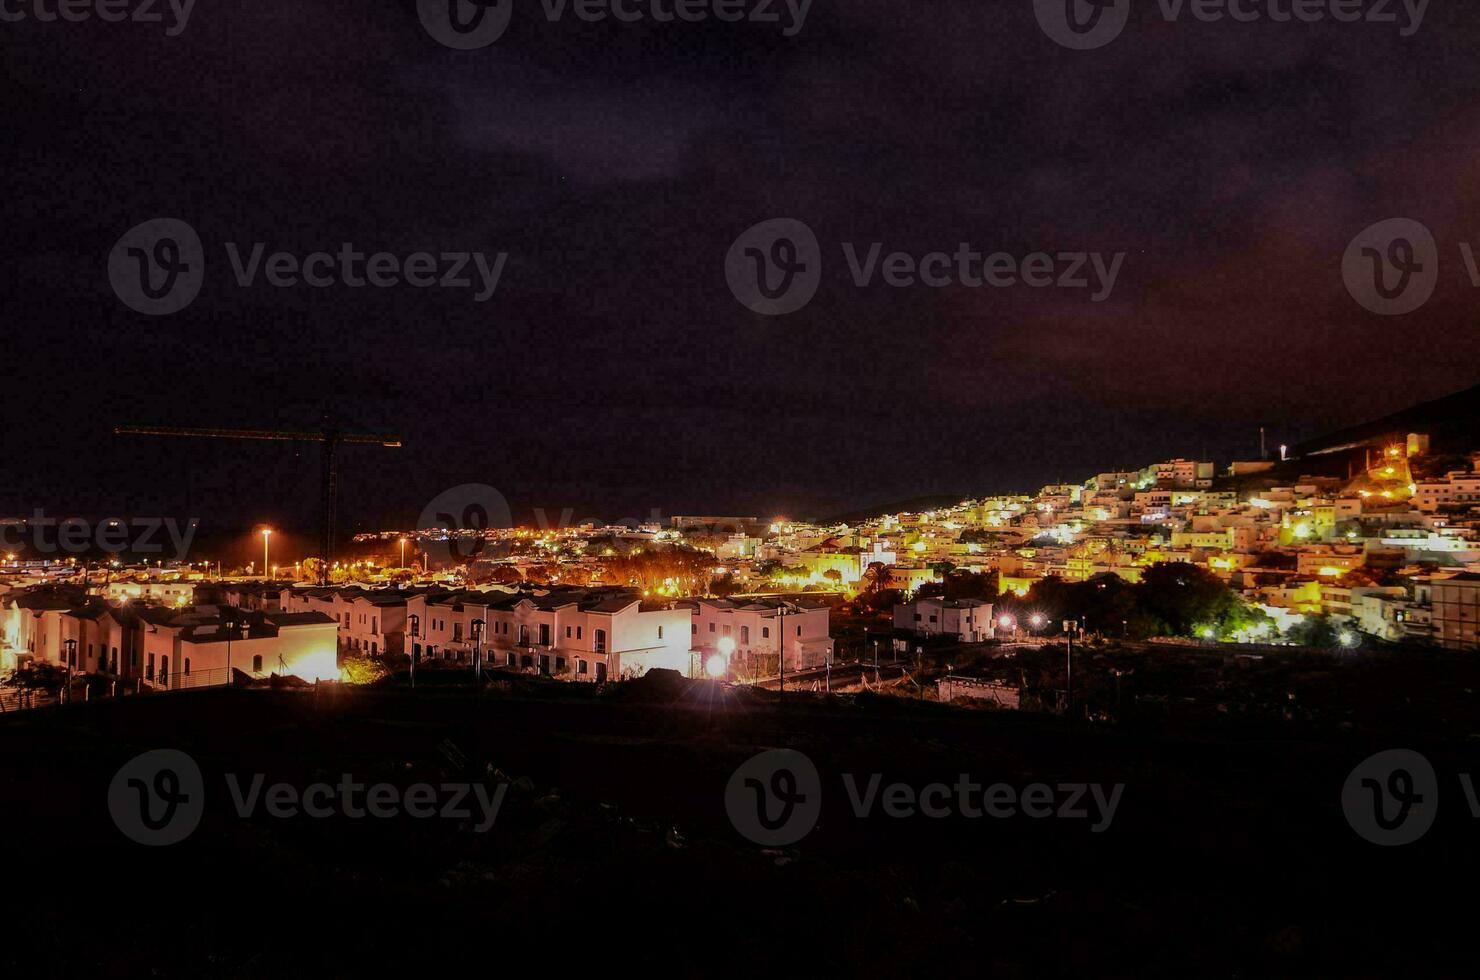 A cityscape at night photo